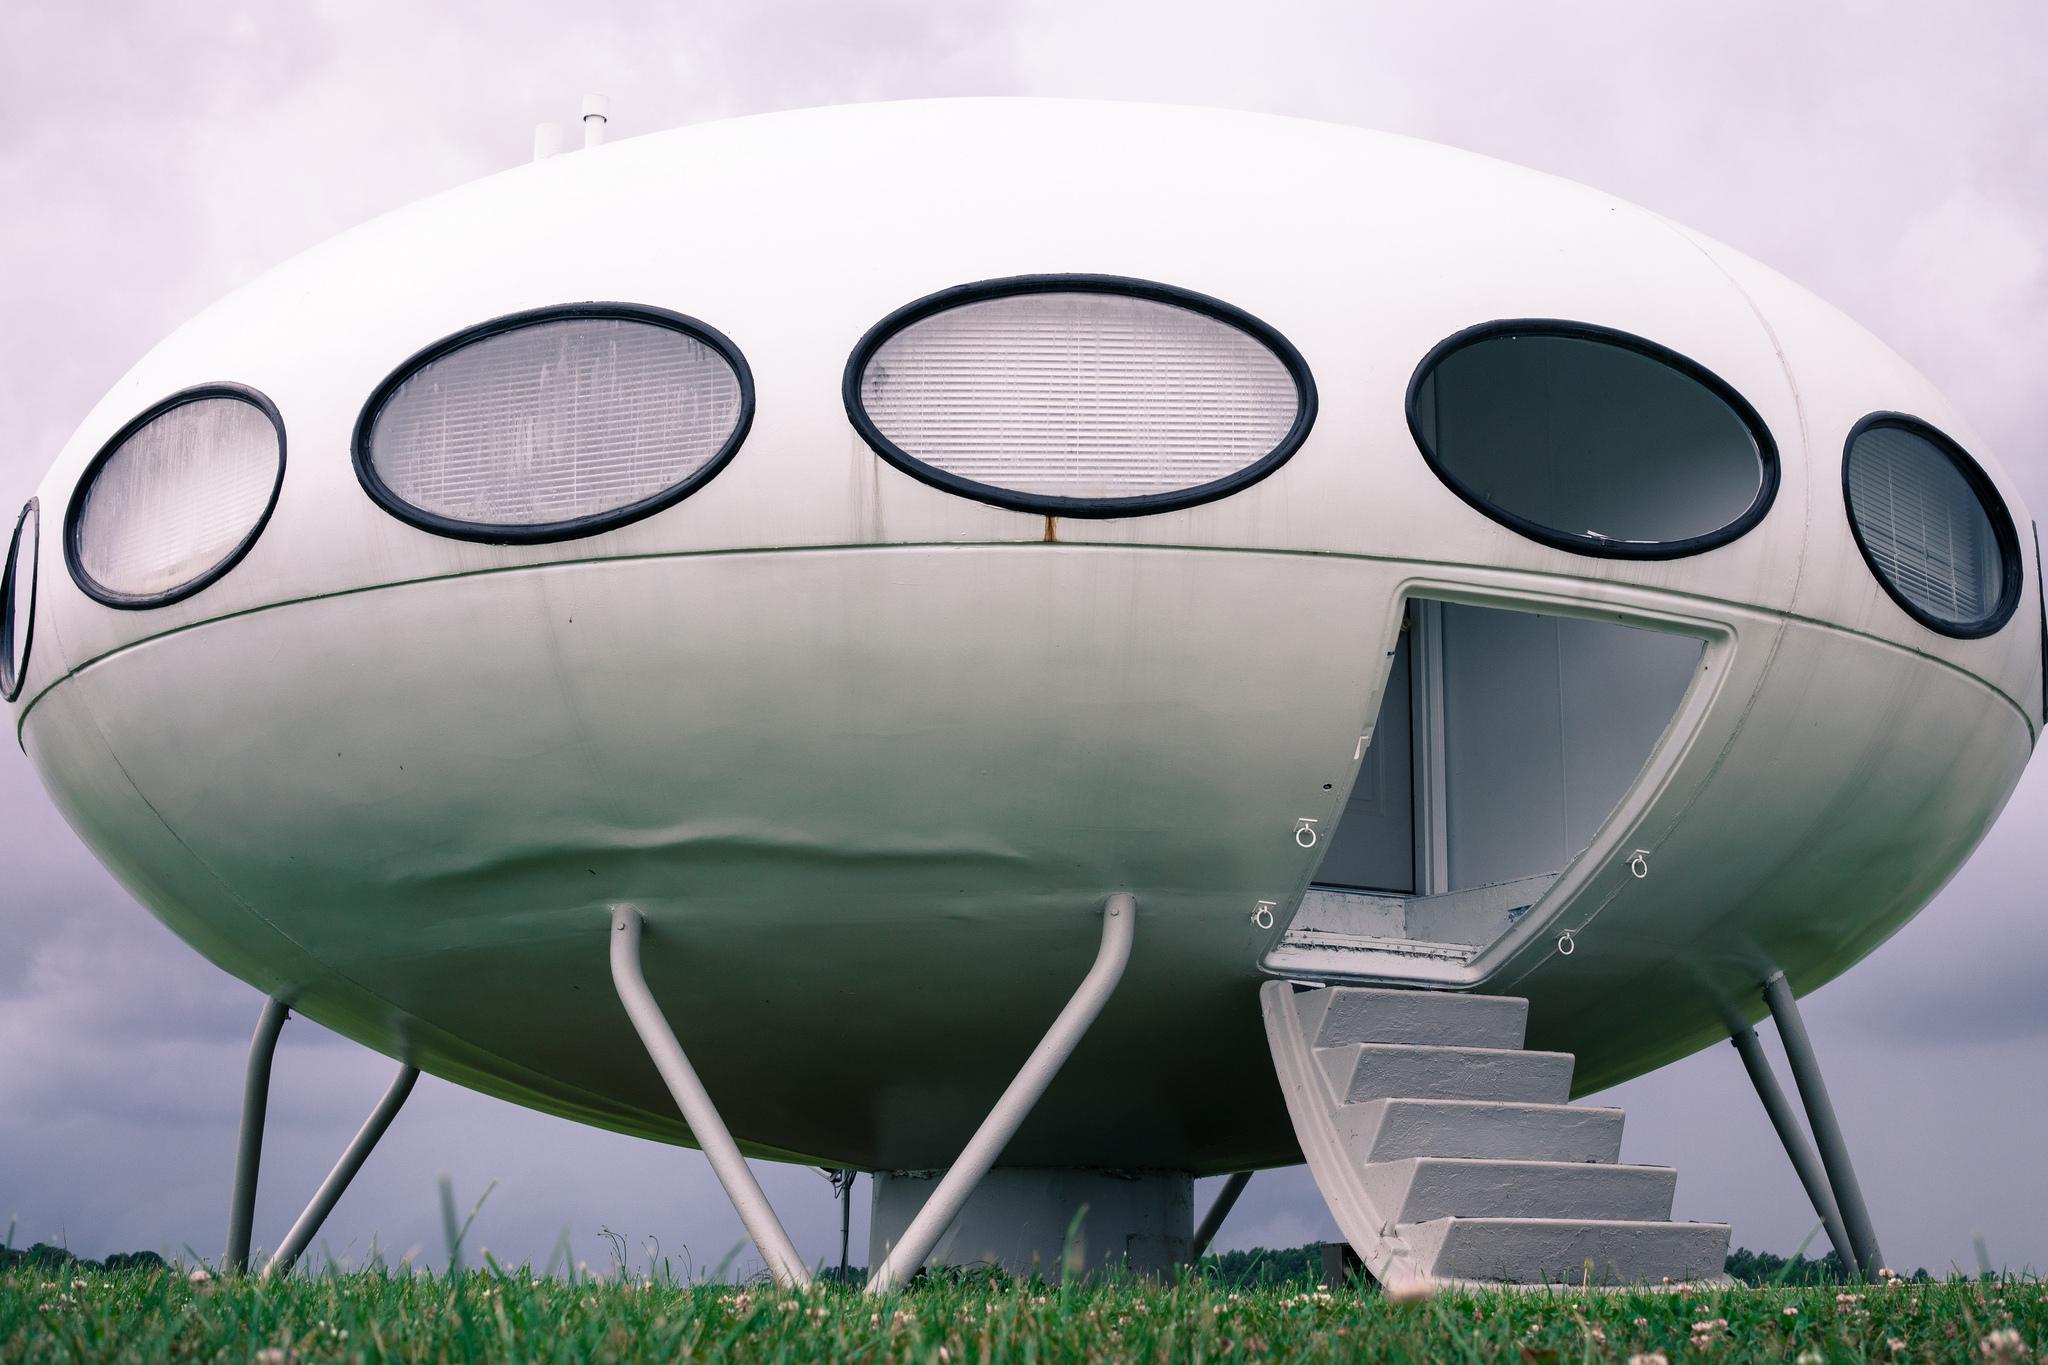 Futuro Houses, UFO houses from the 60s designed by Matti Suuronen